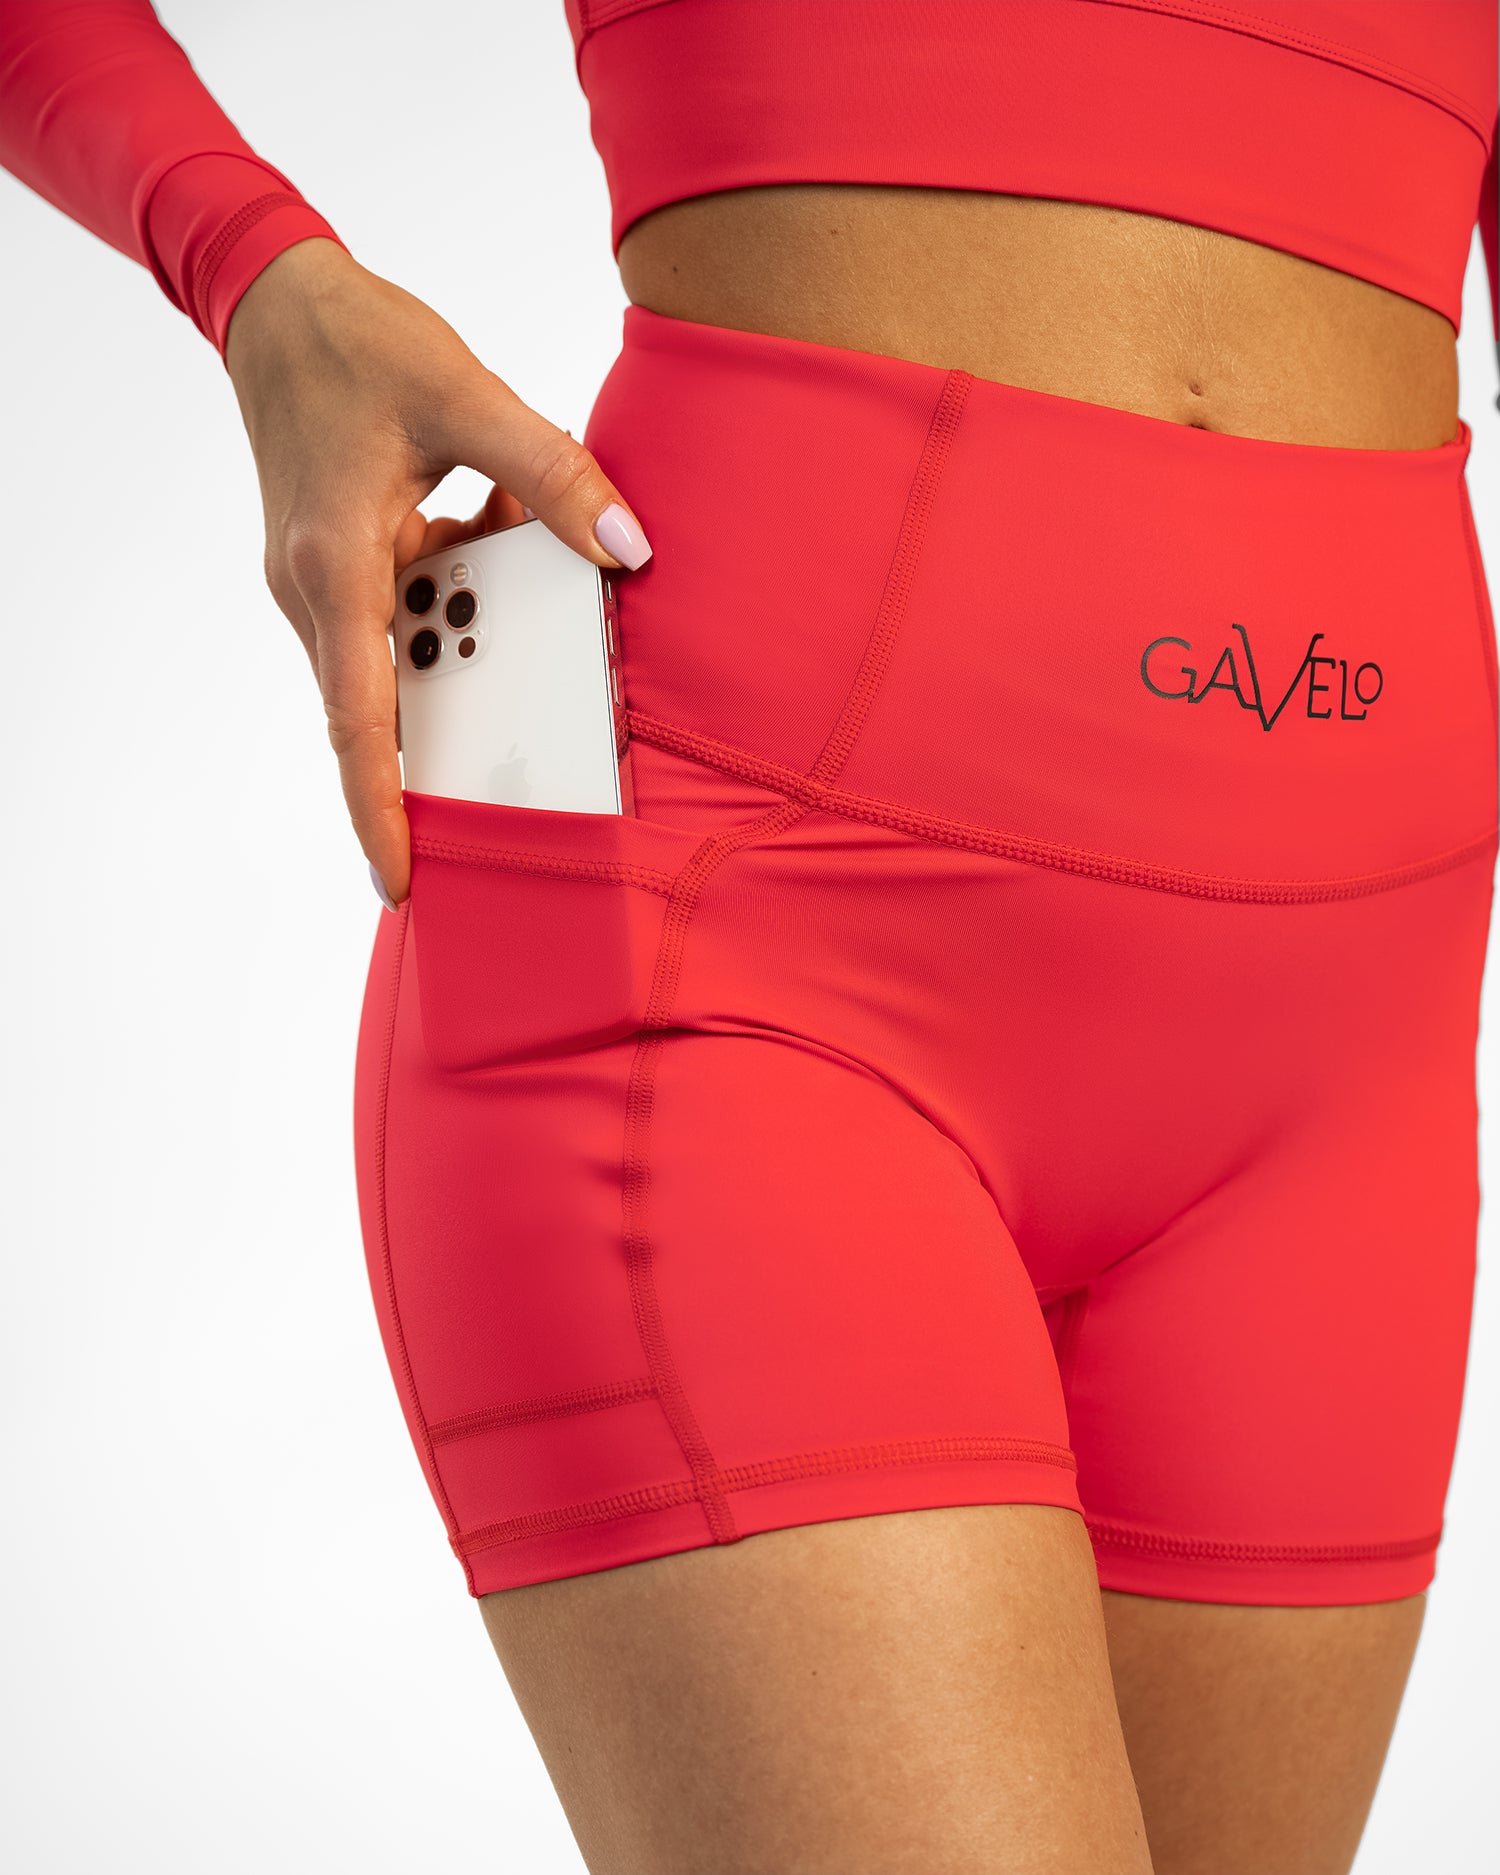 GAVELO Pocket Shorts Radical Red